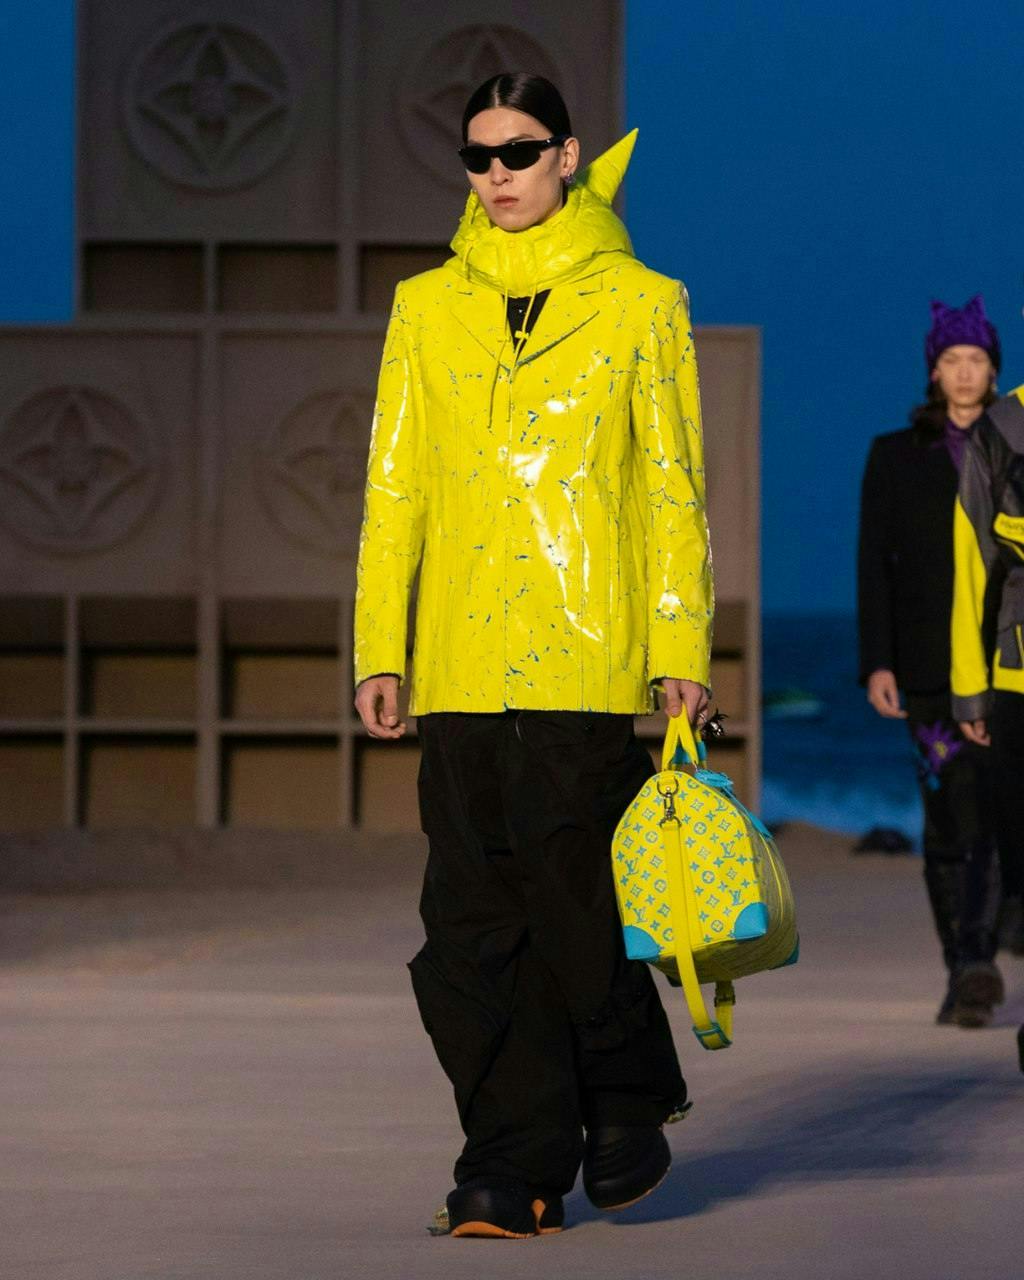 clothing apparel coat person human sunglasses accessories accessory raincoat